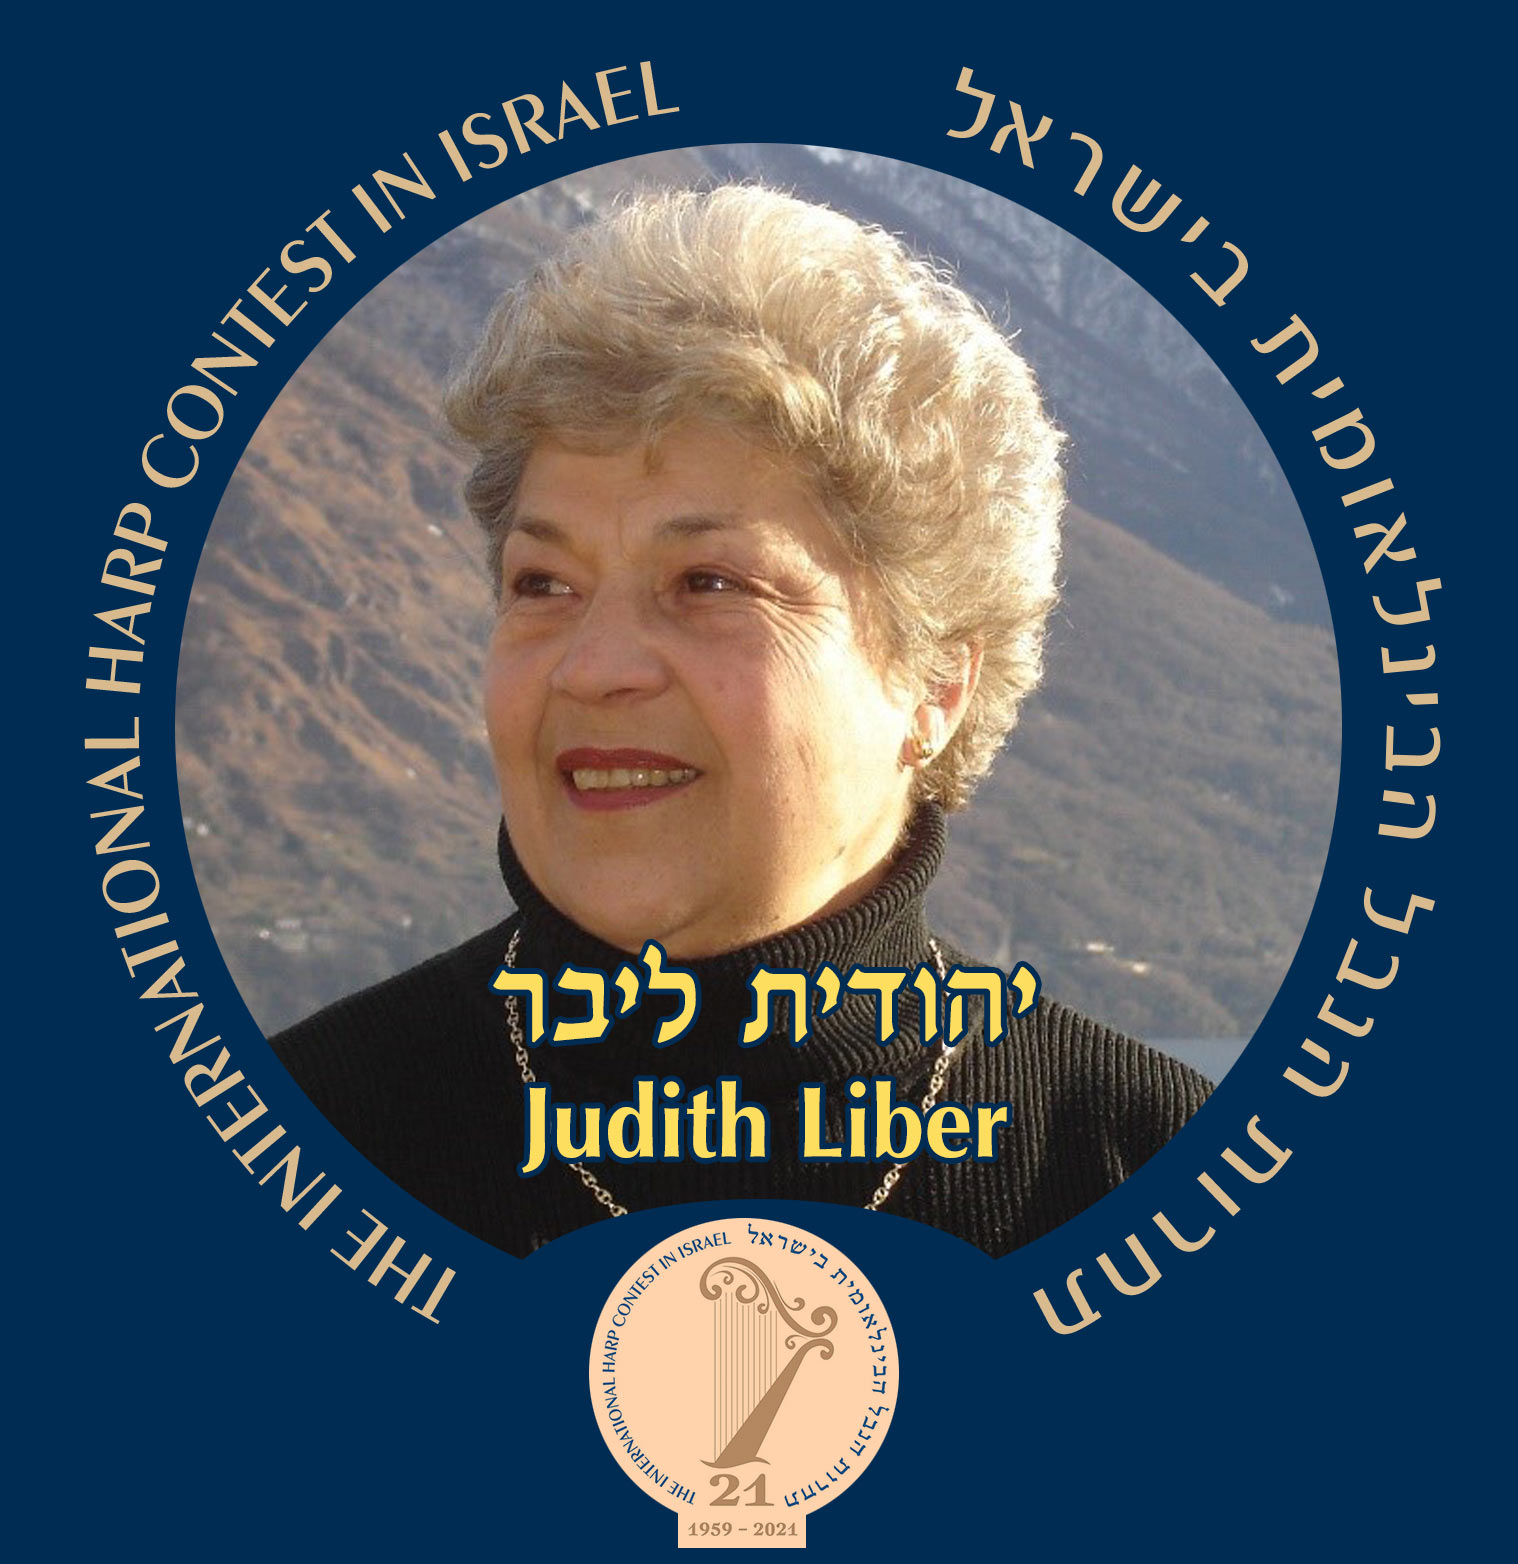 Judith Liber